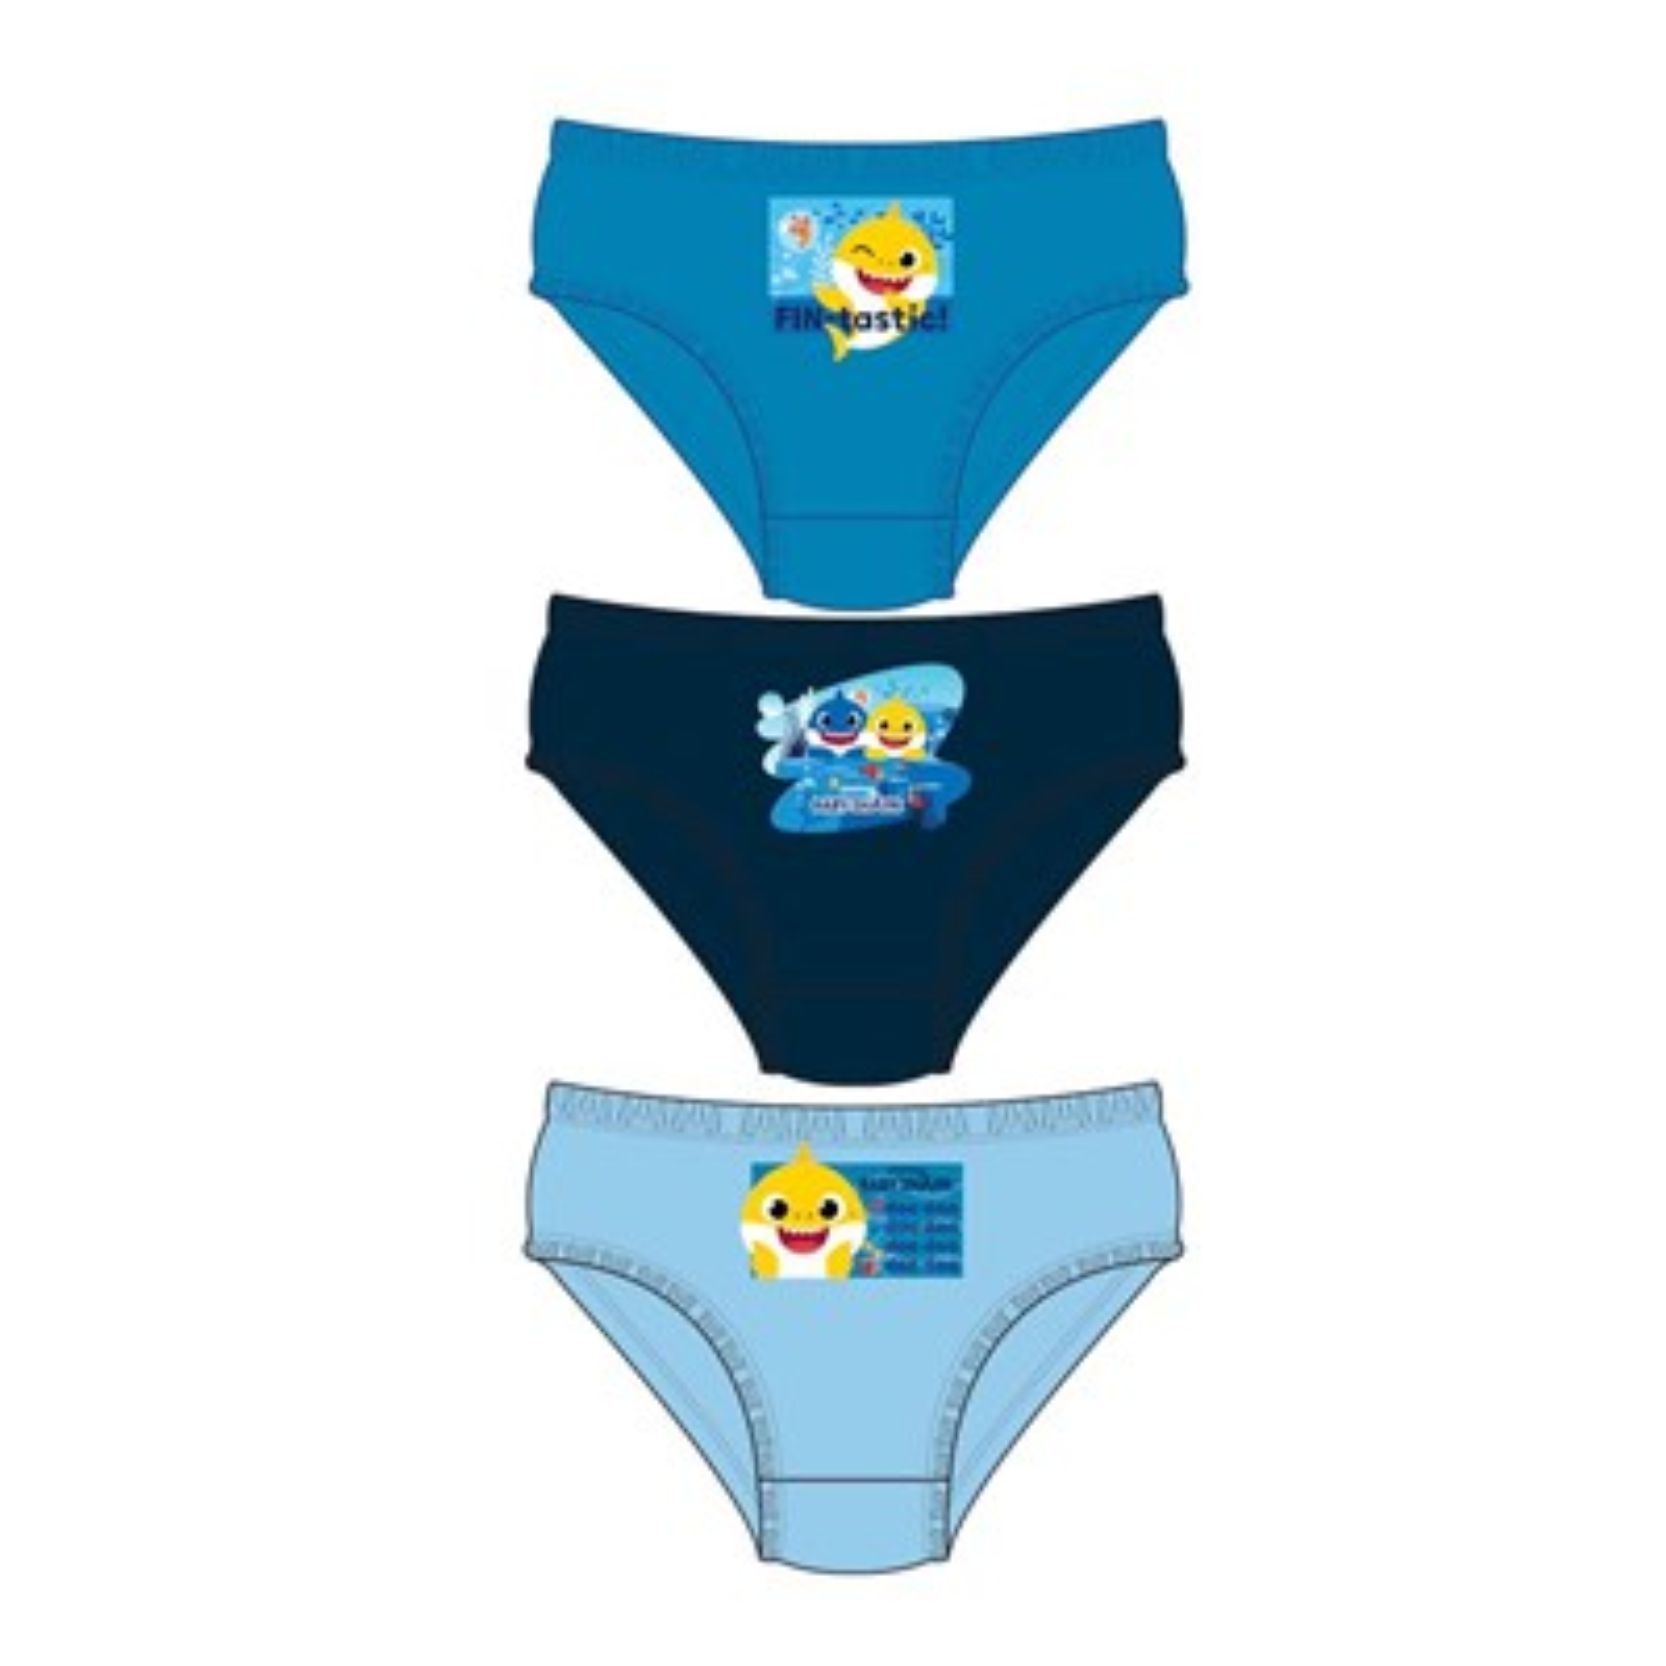 Baby Shark Boys' 5-Pack Briefs - blue/multi, 2t - 3t (Toddler) 